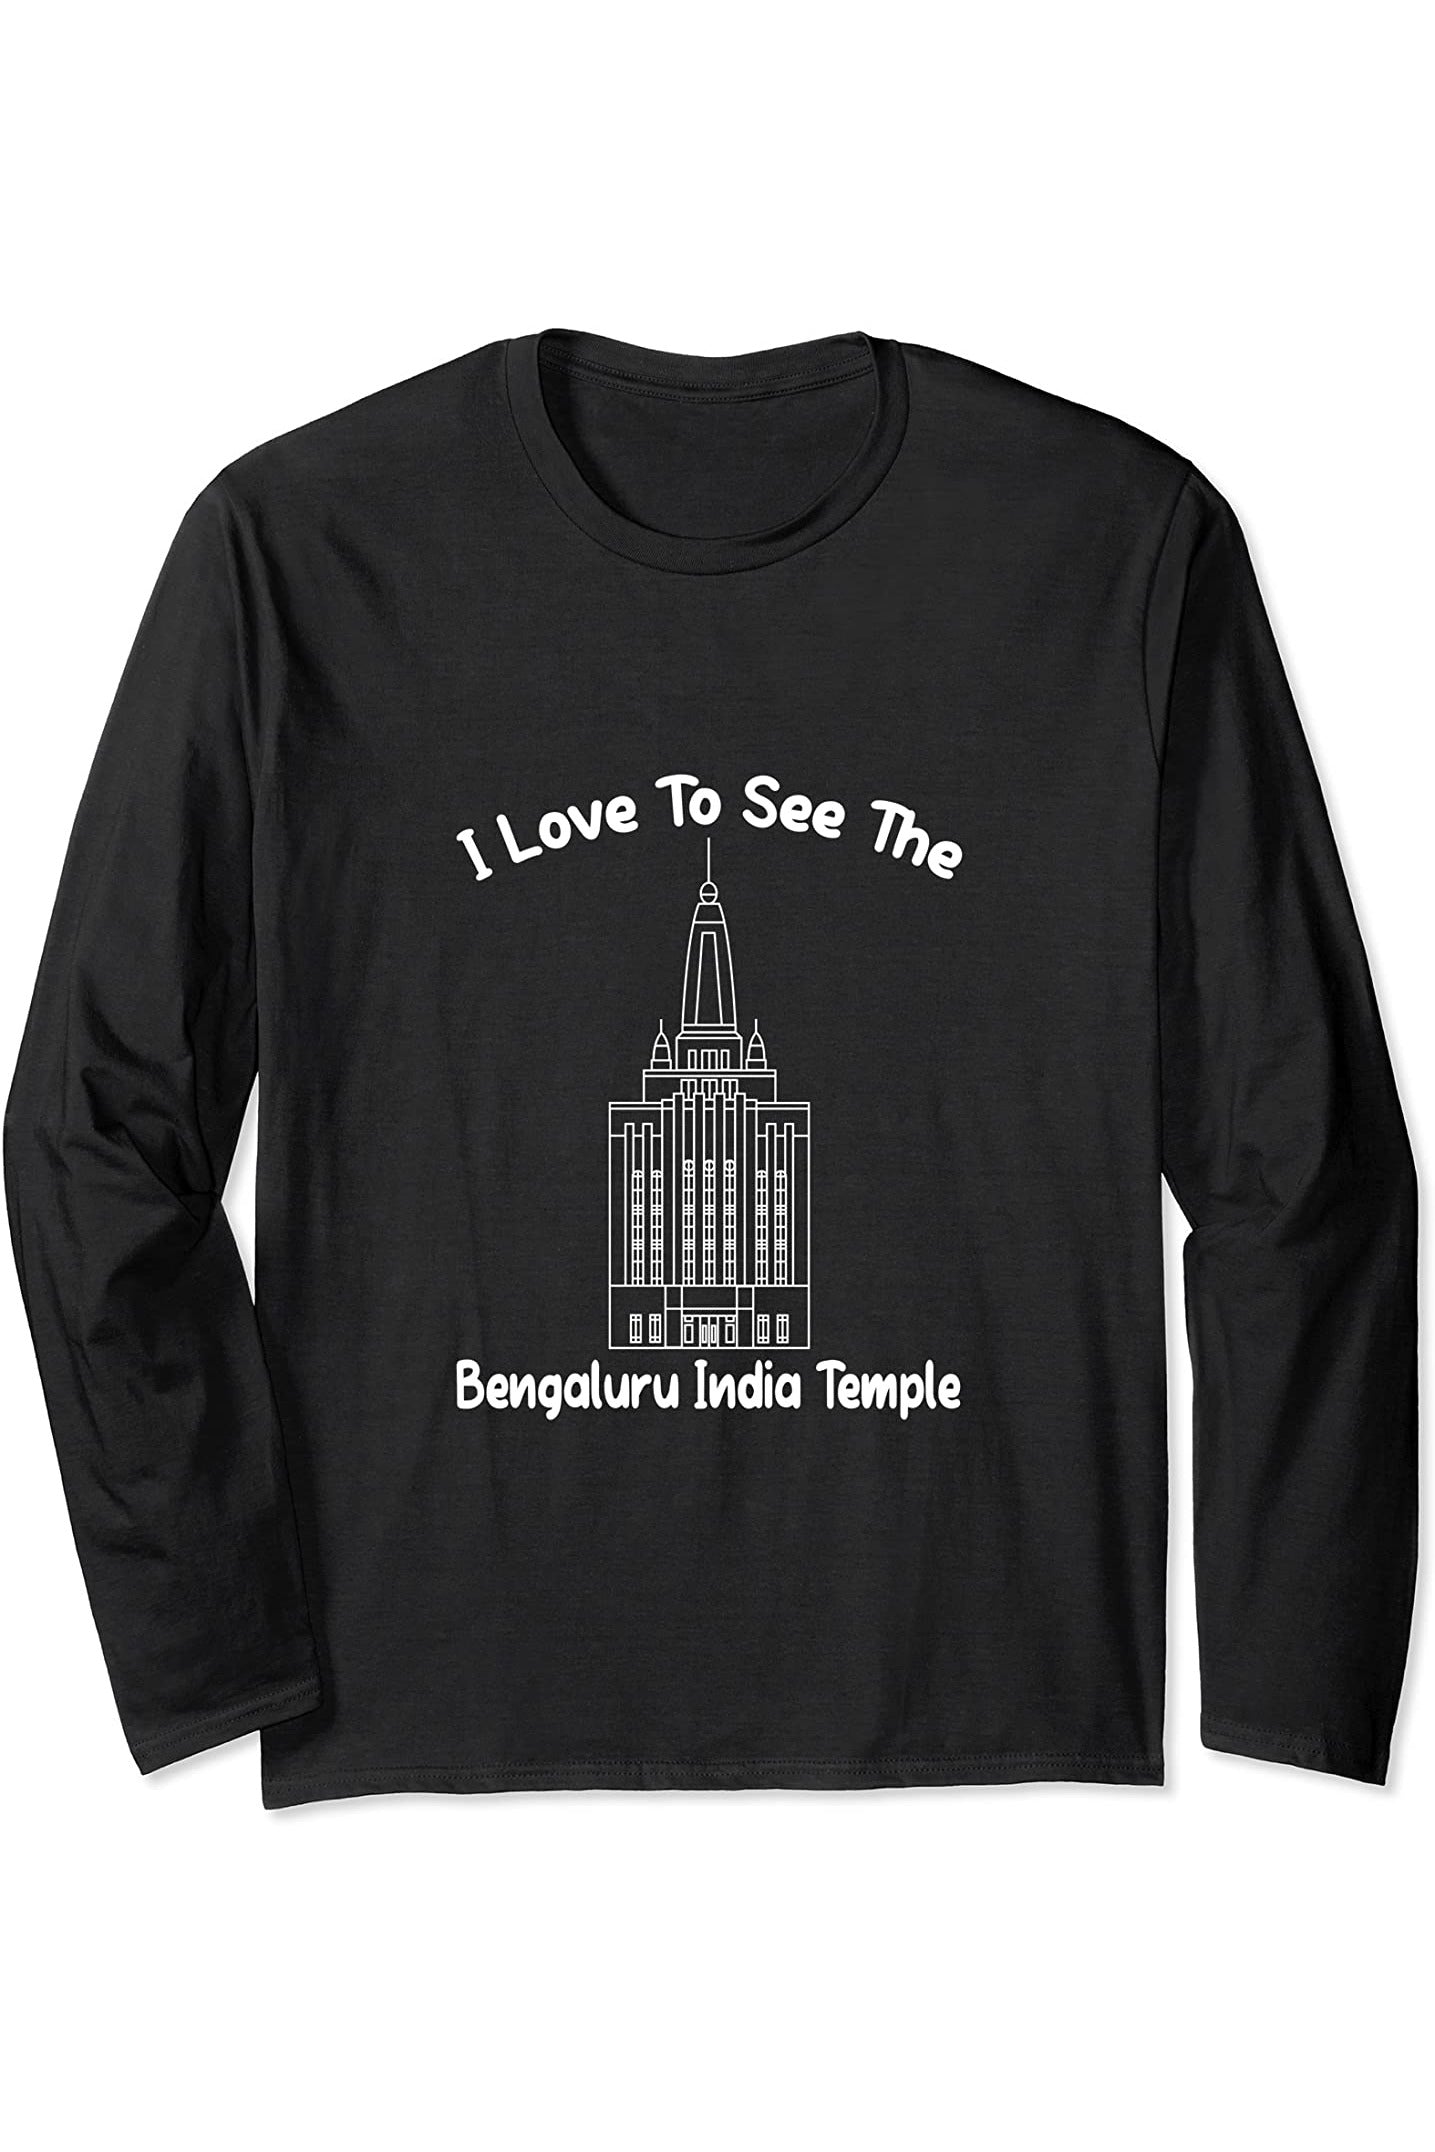 Bengaluru India Temple Long Sleeve T-Shirt - Primary Style (English) US